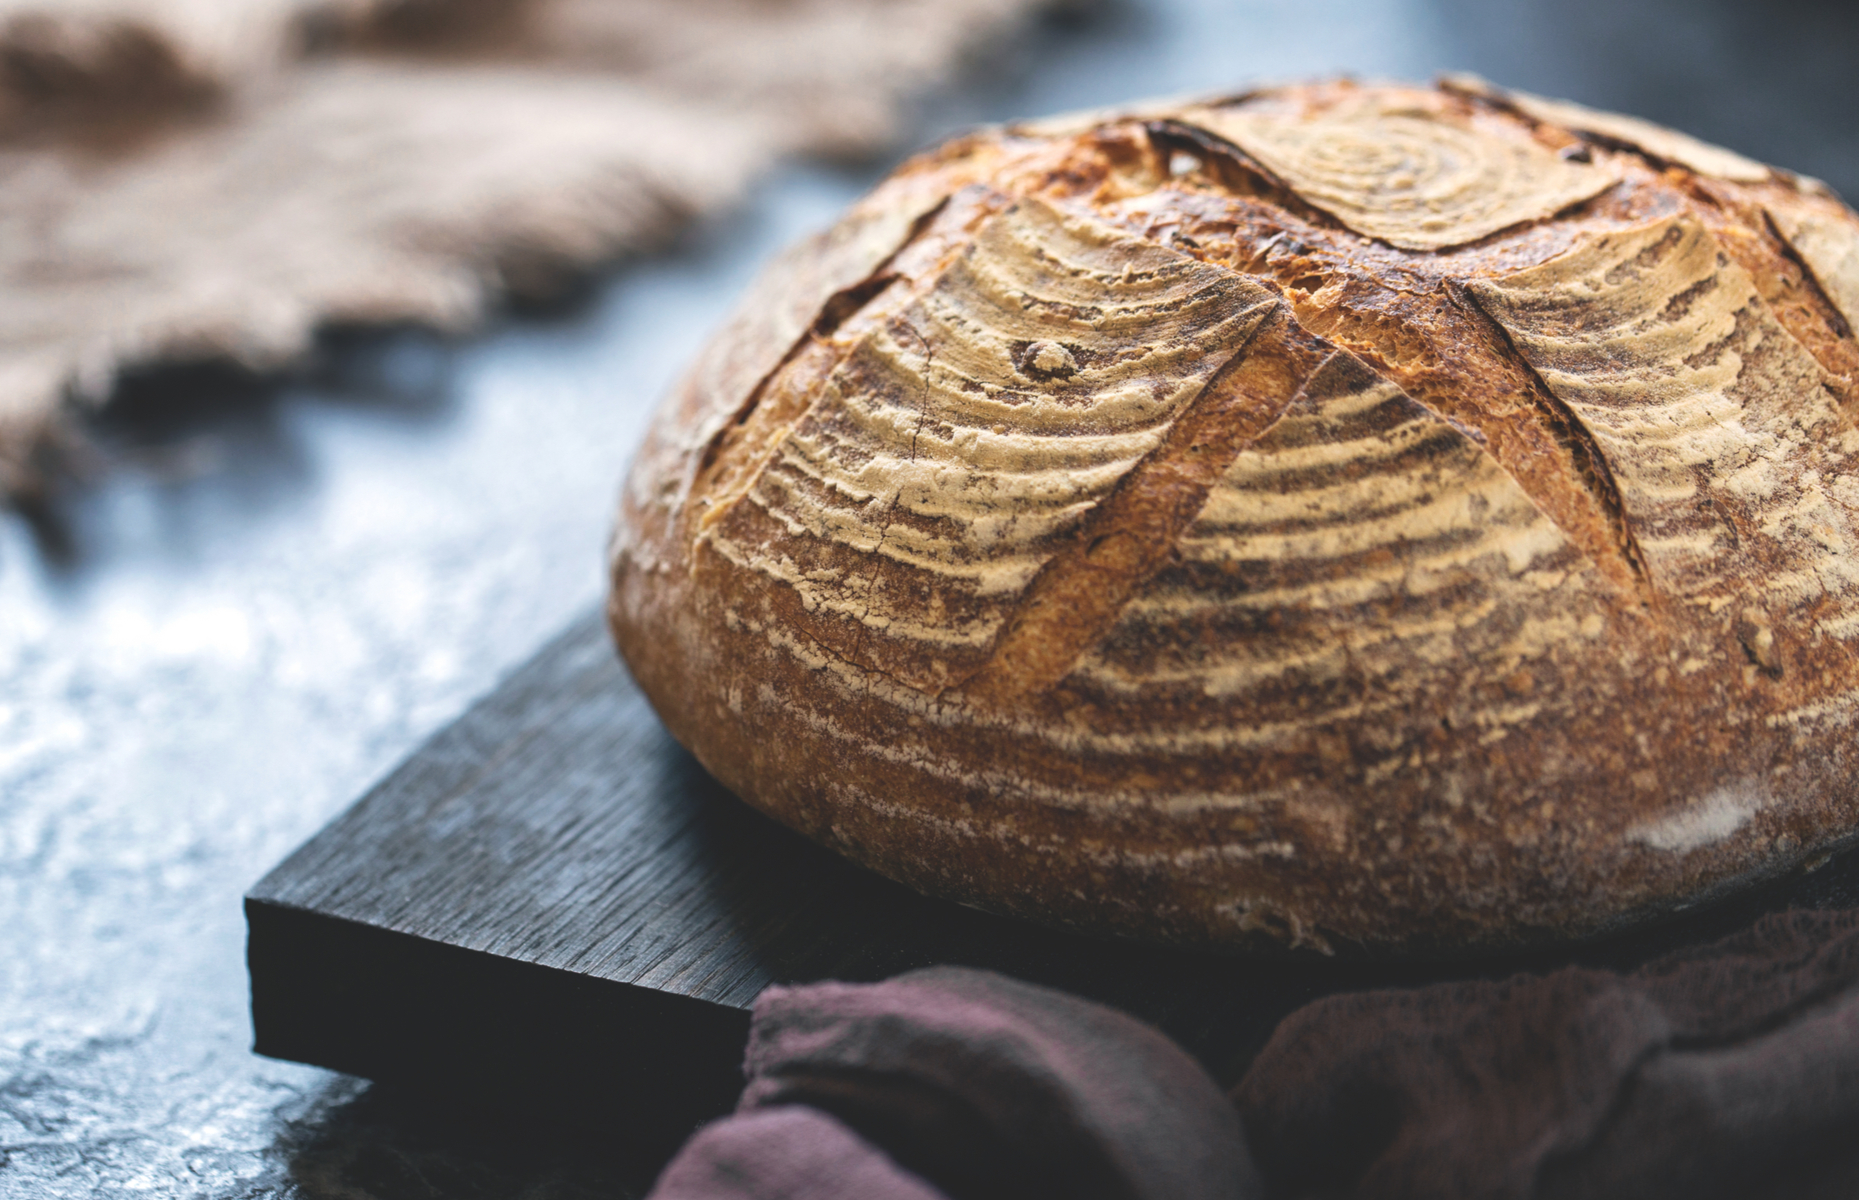 Sourdough bread (Image: Ievgeniia Maslovska/Shutterstock)